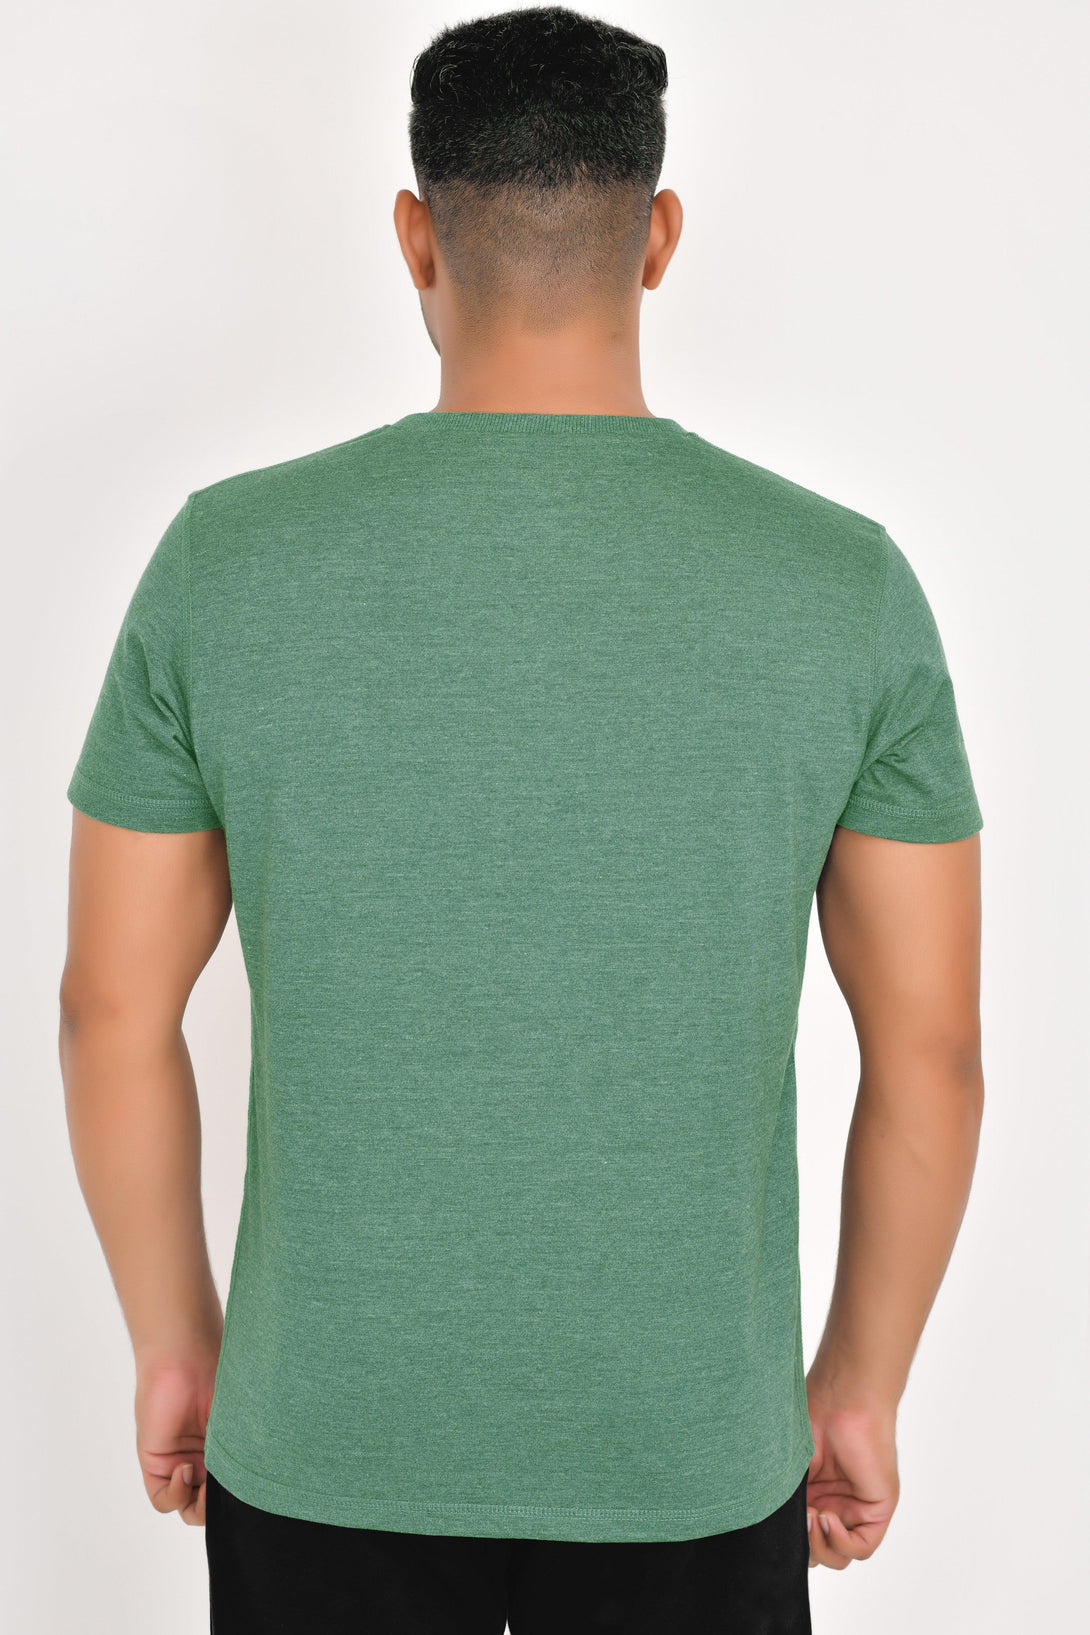 HENLEY T-Shirts | GREEN MELANGE-CHARCOAL-WINE - FTS